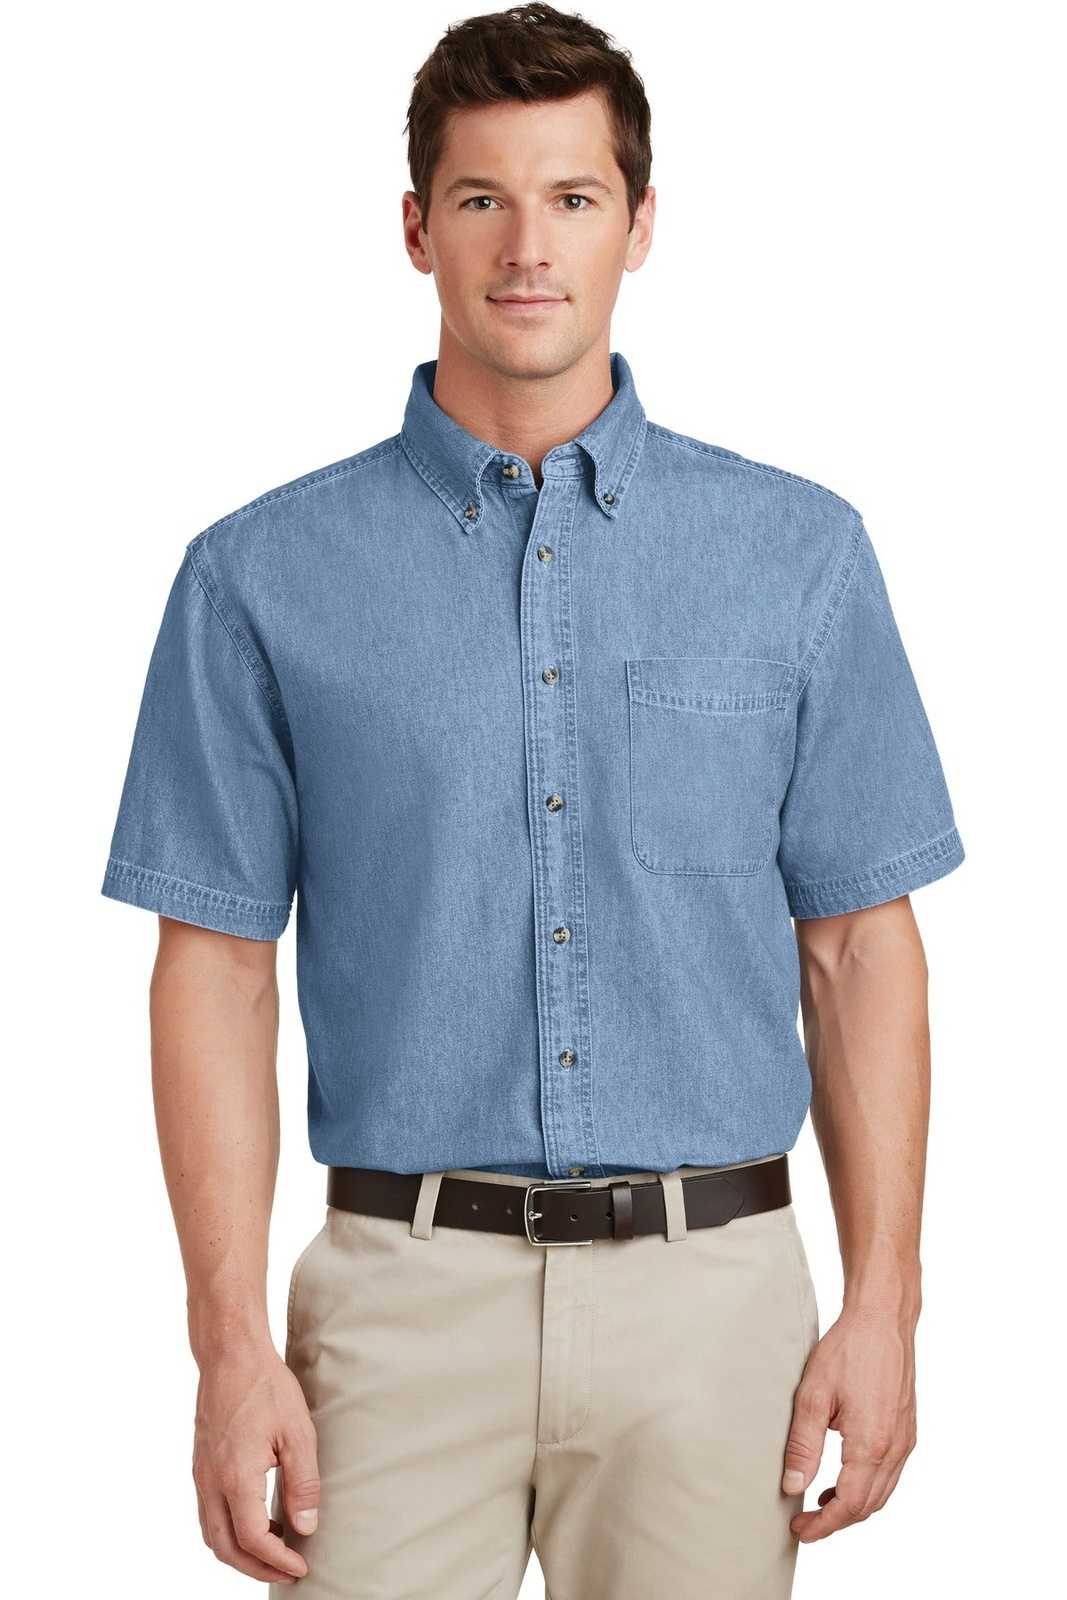 Port & Company SP11 Short Sleeve Value Denim Shirt - Faded Blue - HIT a Double - 1